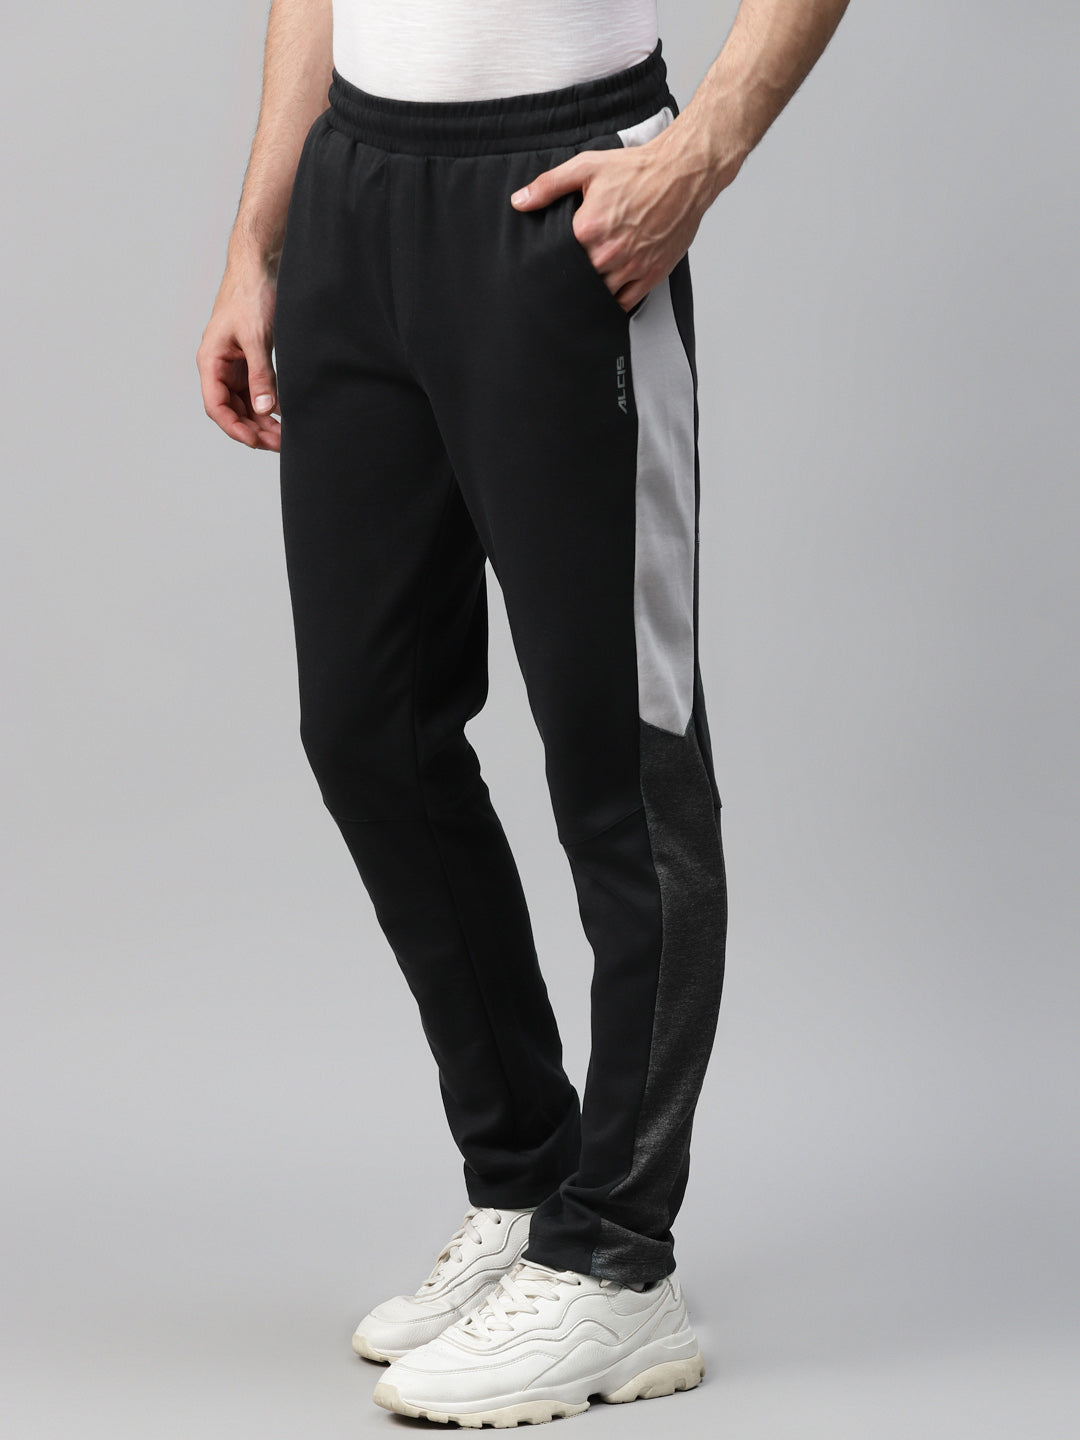 Up Mens Track Pants Black HY3781  nike air yeezy 2 red october release  date  adidas school Sportswear Tor Suit